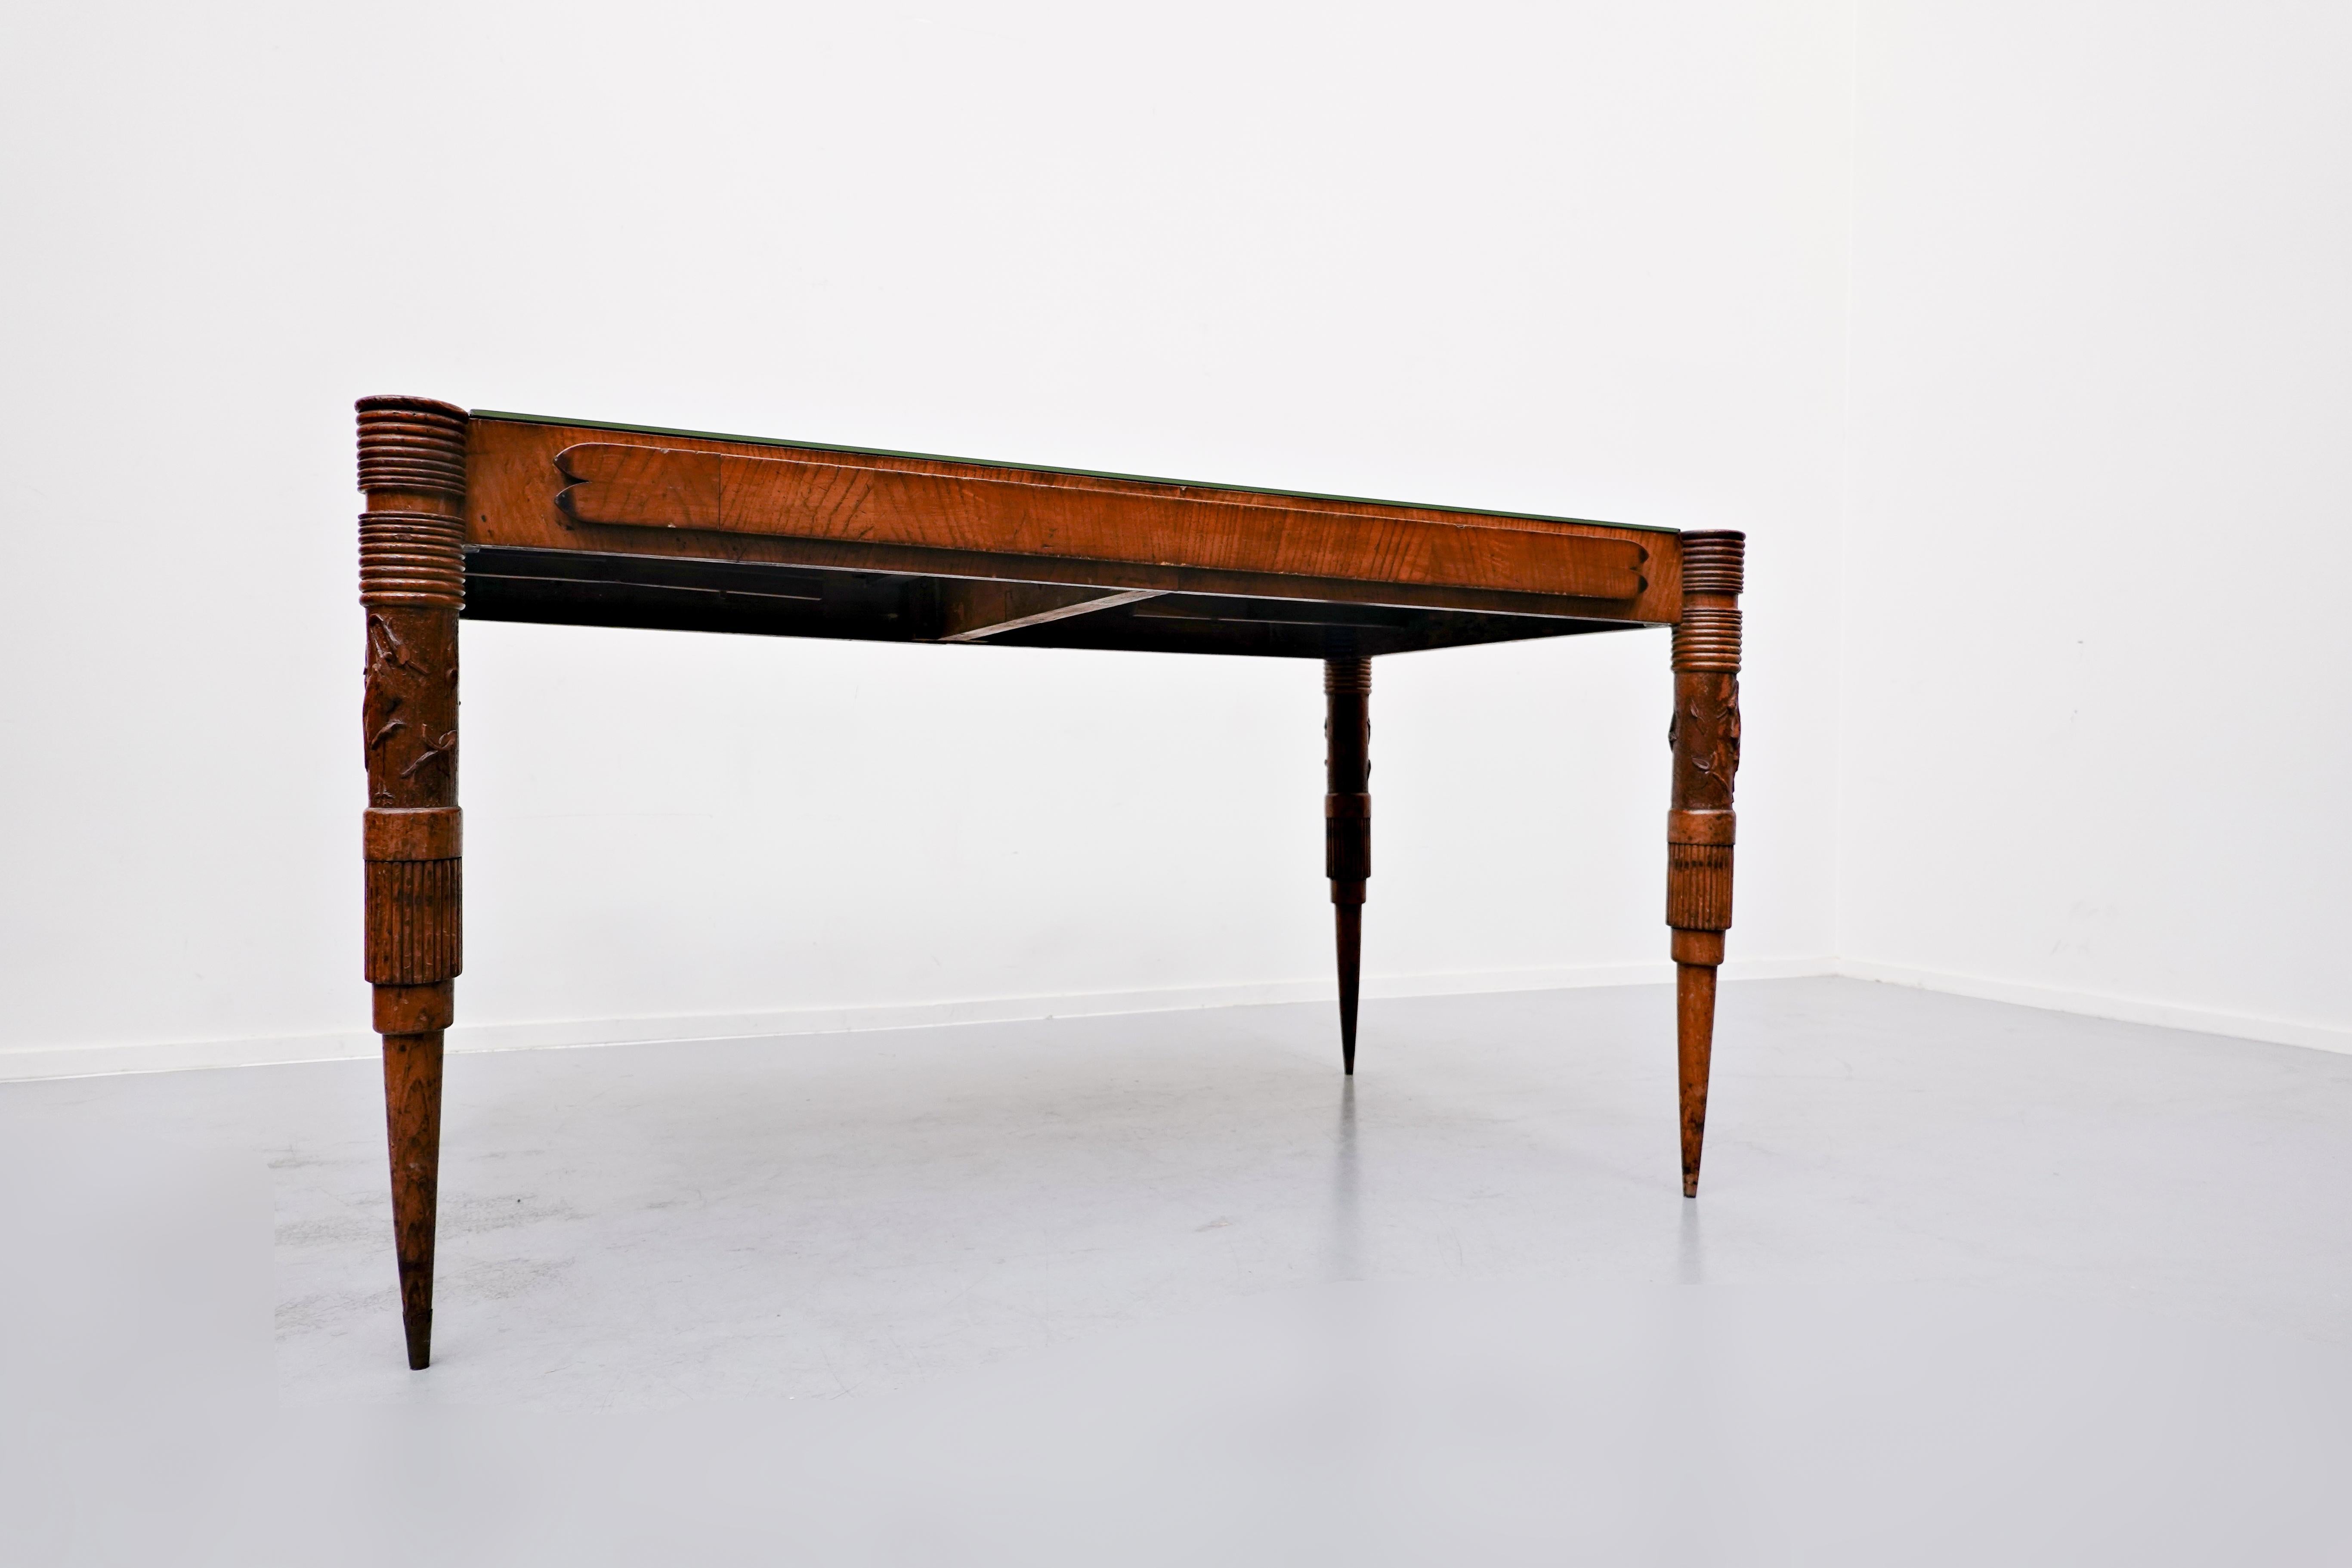 Italian extendable dining table by Pier Luigi Colli, 1940s
Measure: W 148-207 cm.